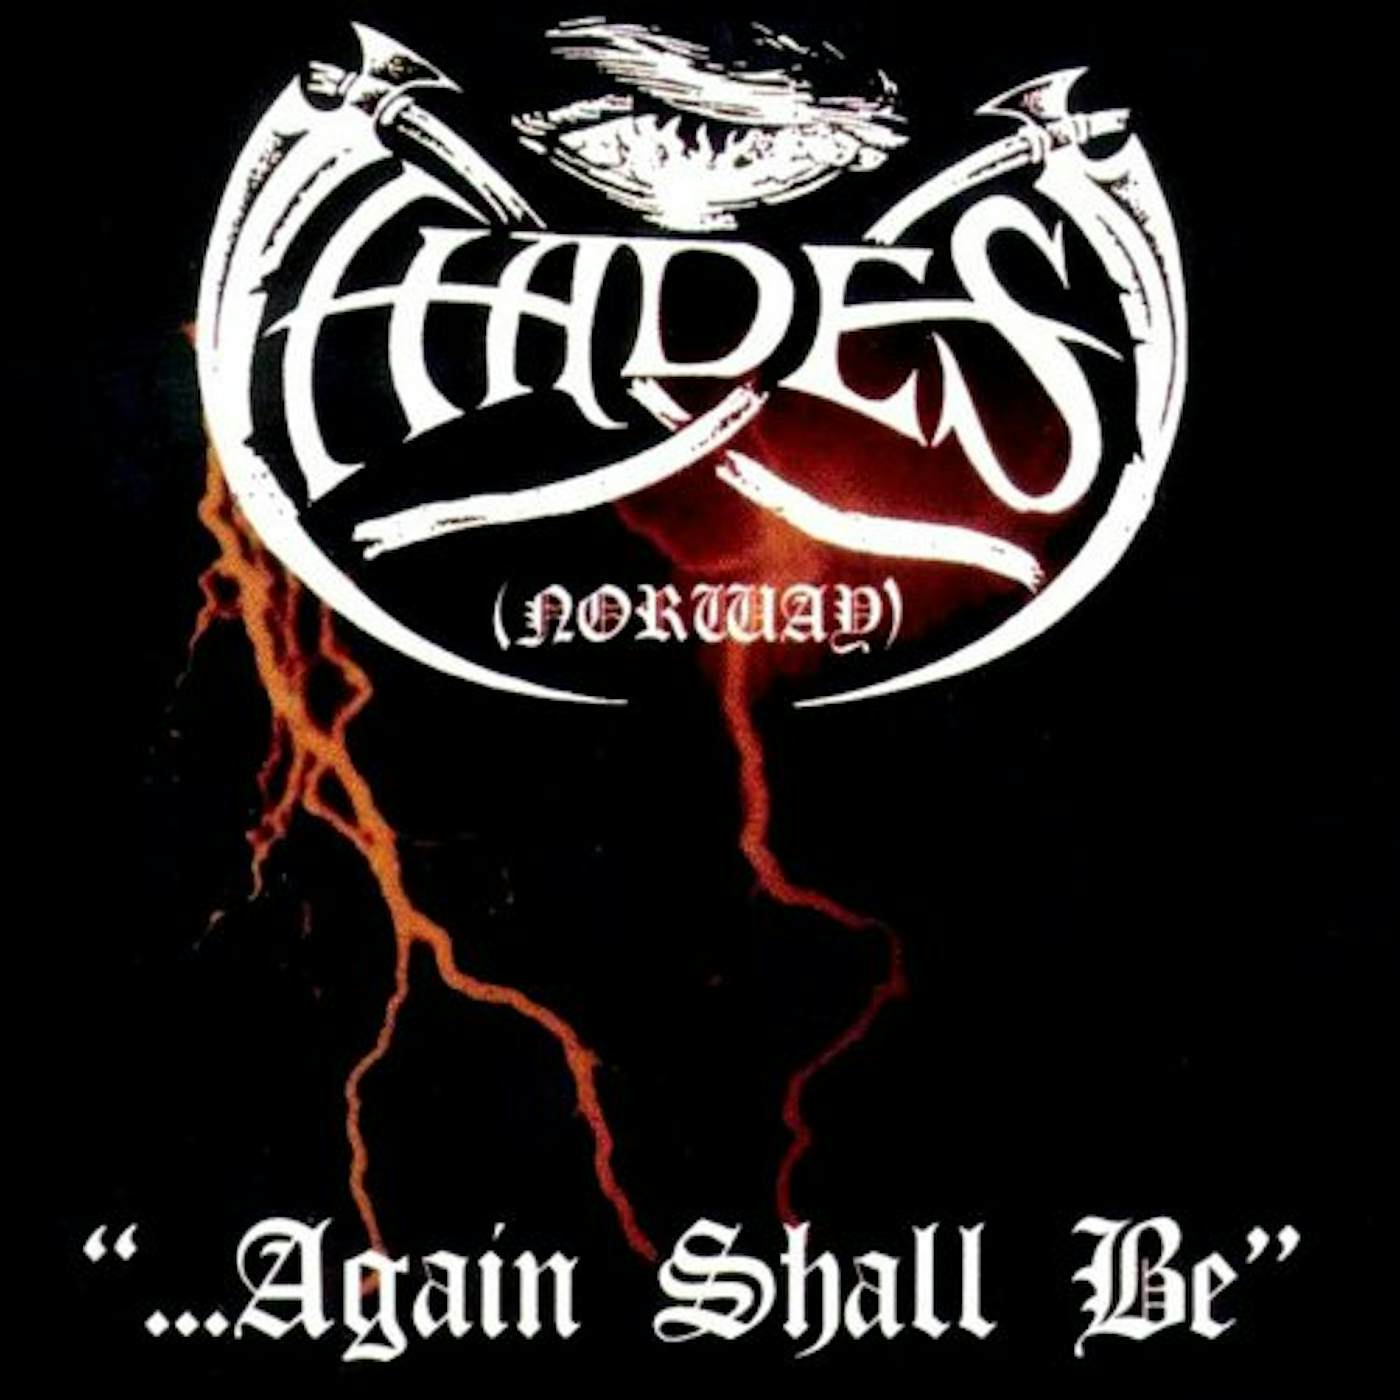 Hades Again Shall Be Vinyl Record